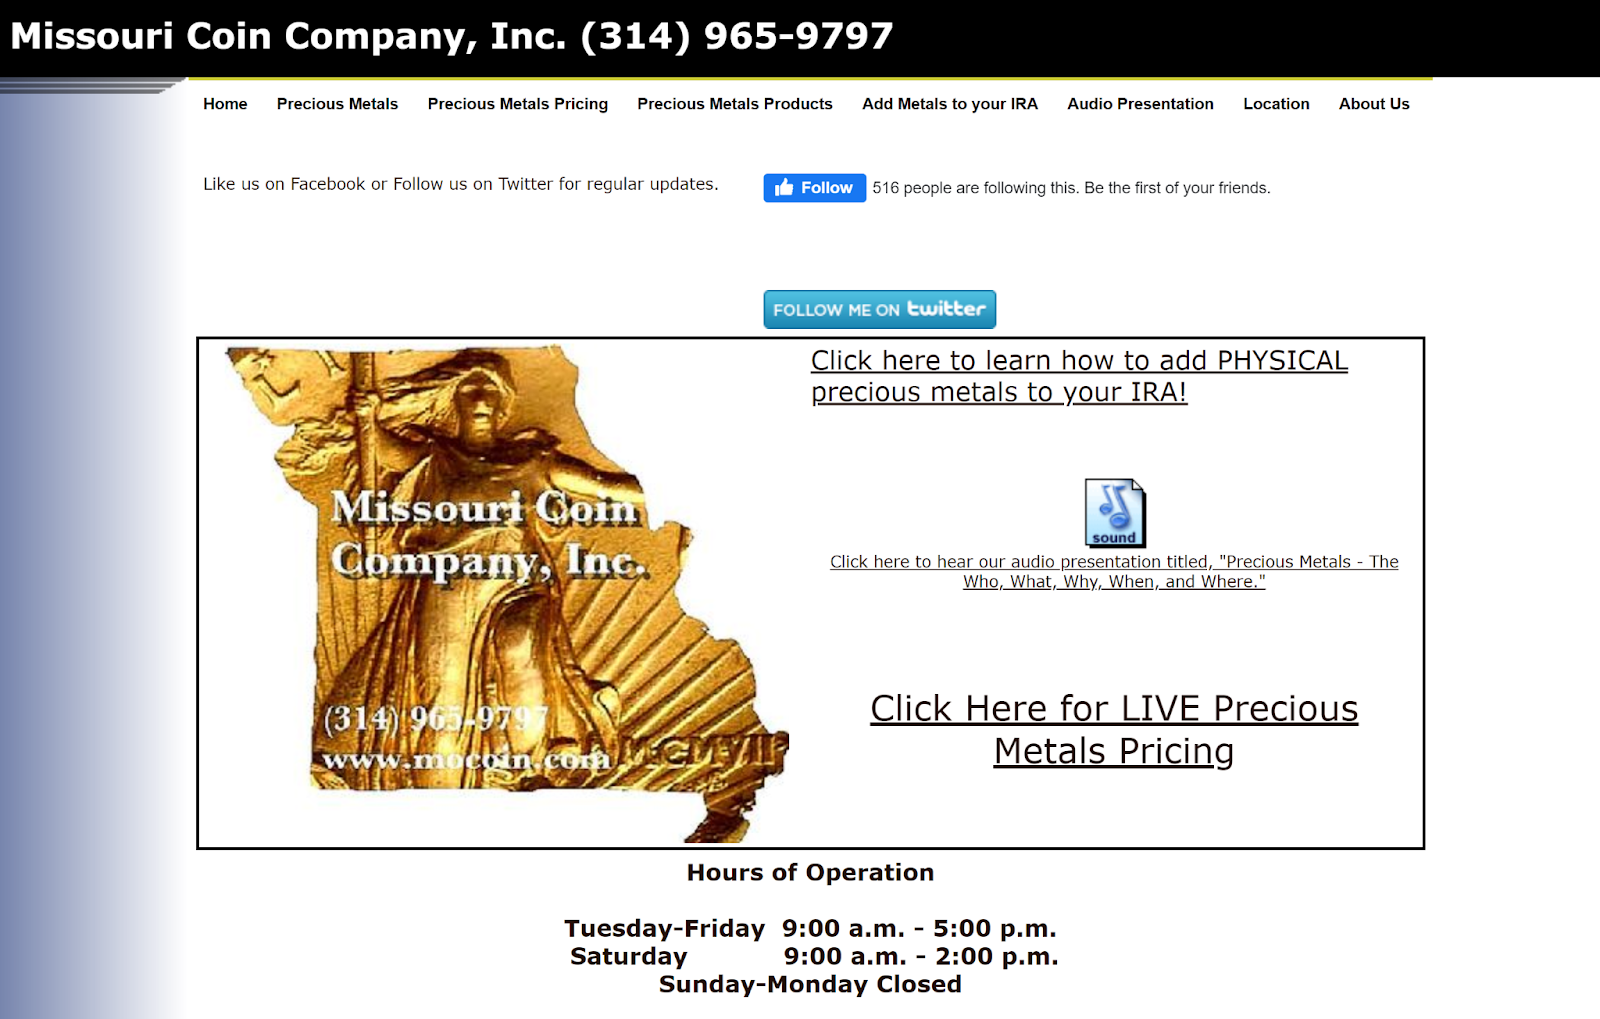 Missouri Coin Company website 